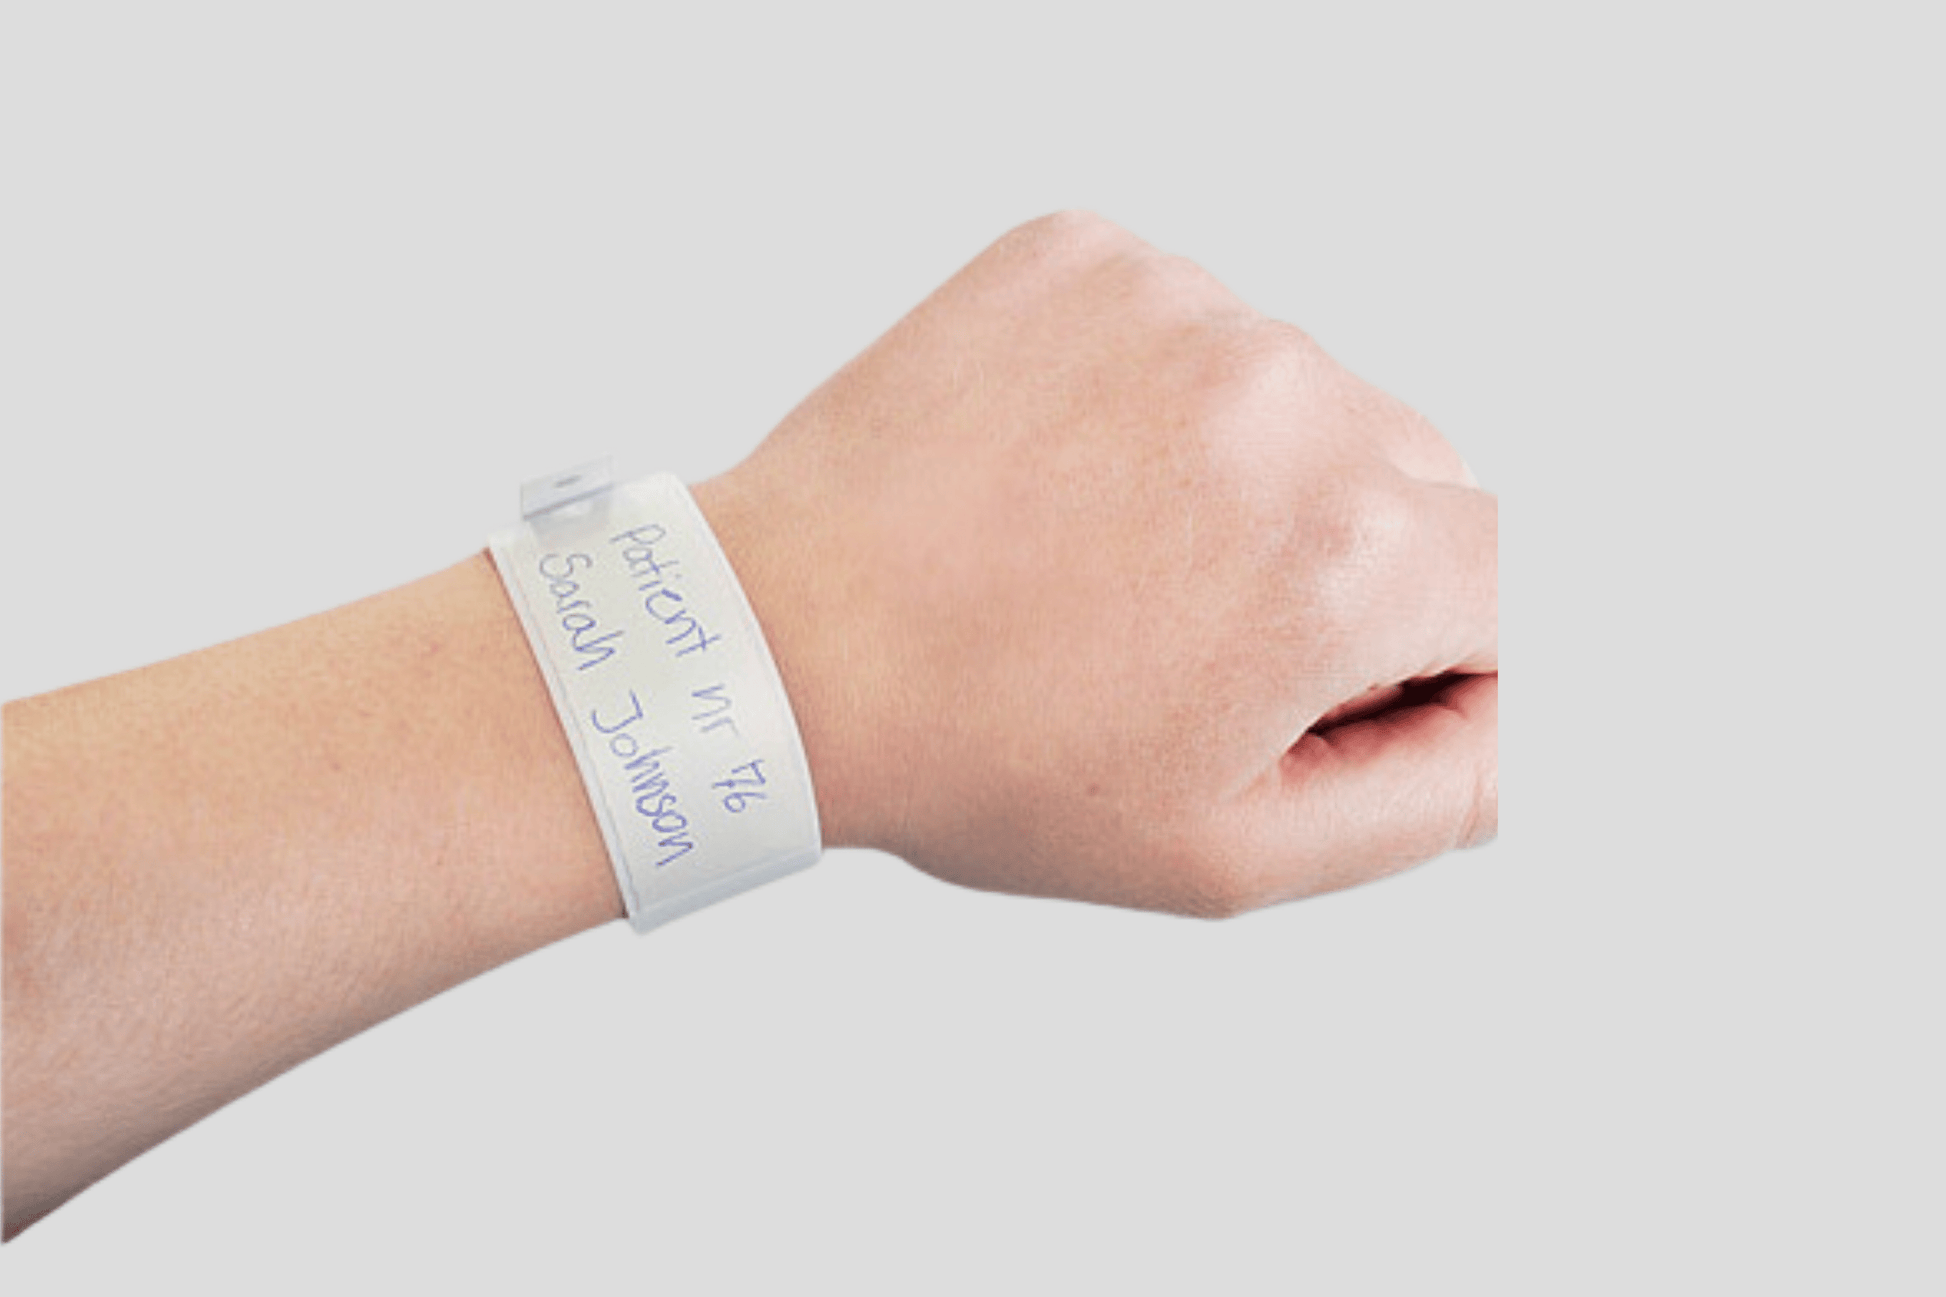 En persons håndledd med JM Band NO pasientarmbånd plastik lomme, kjent som pasientarmbånd eller sykehusarmbånd på sykehus.